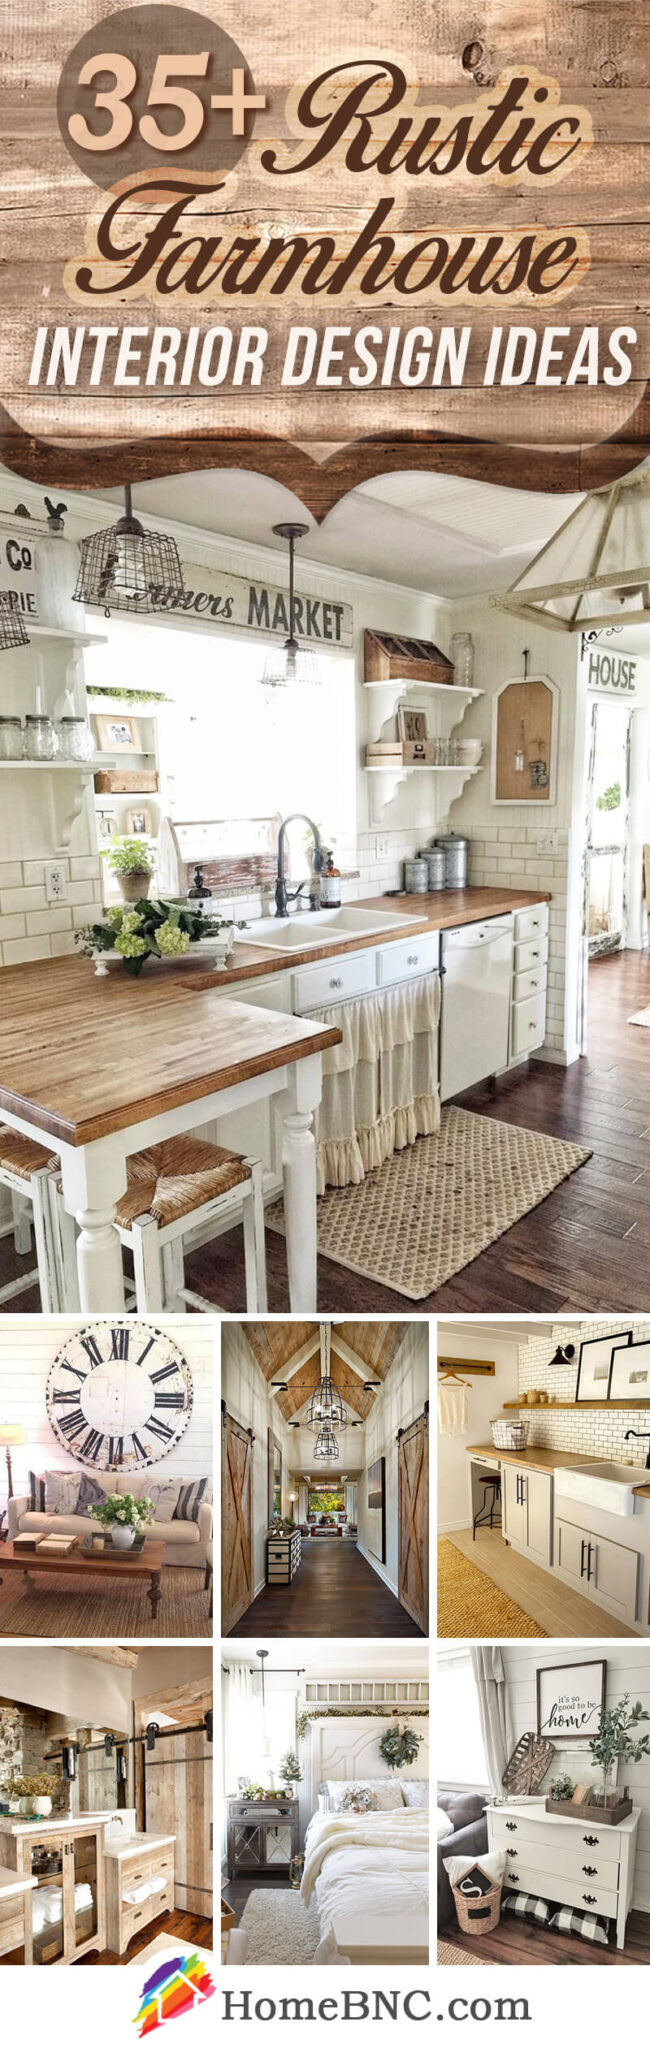 Rustic Farmhouse Interior Design Ideas Pinterest Share Homebnc 650x2048 